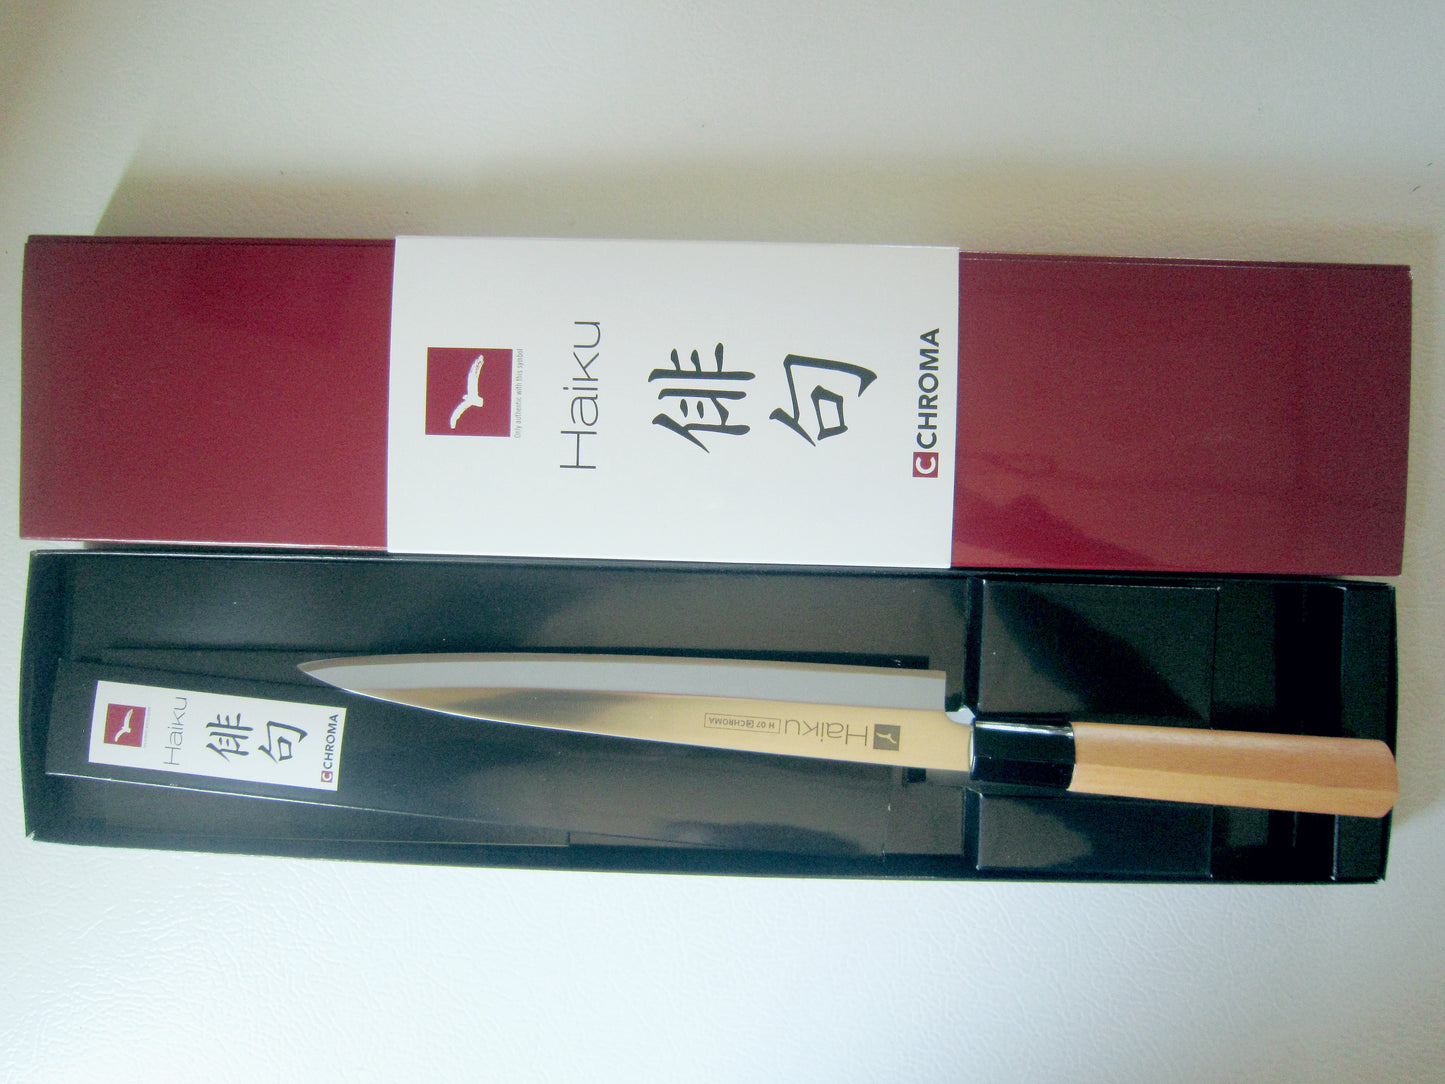 Haiki - H02  - 5 in Utility knife